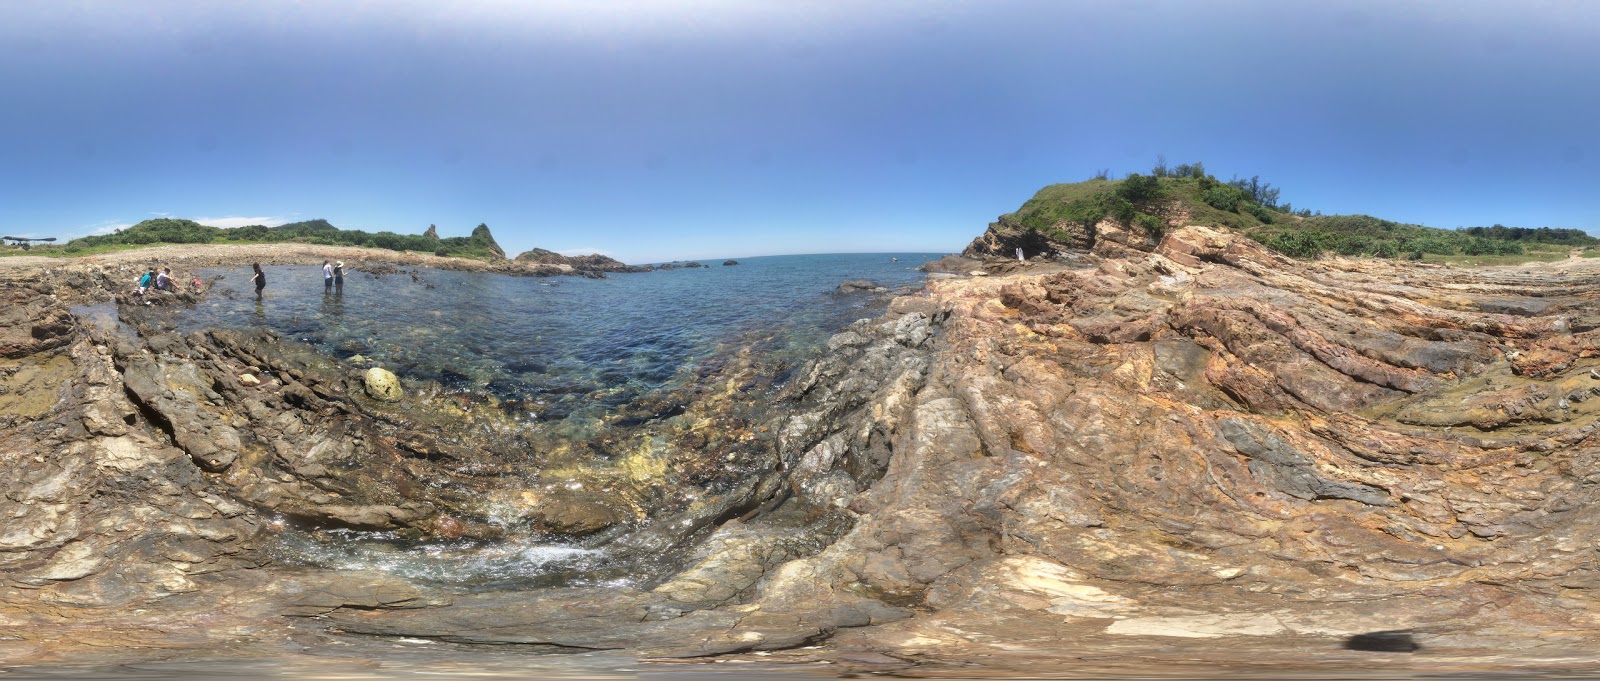 Photo of Bridge rocks beach located in natural area